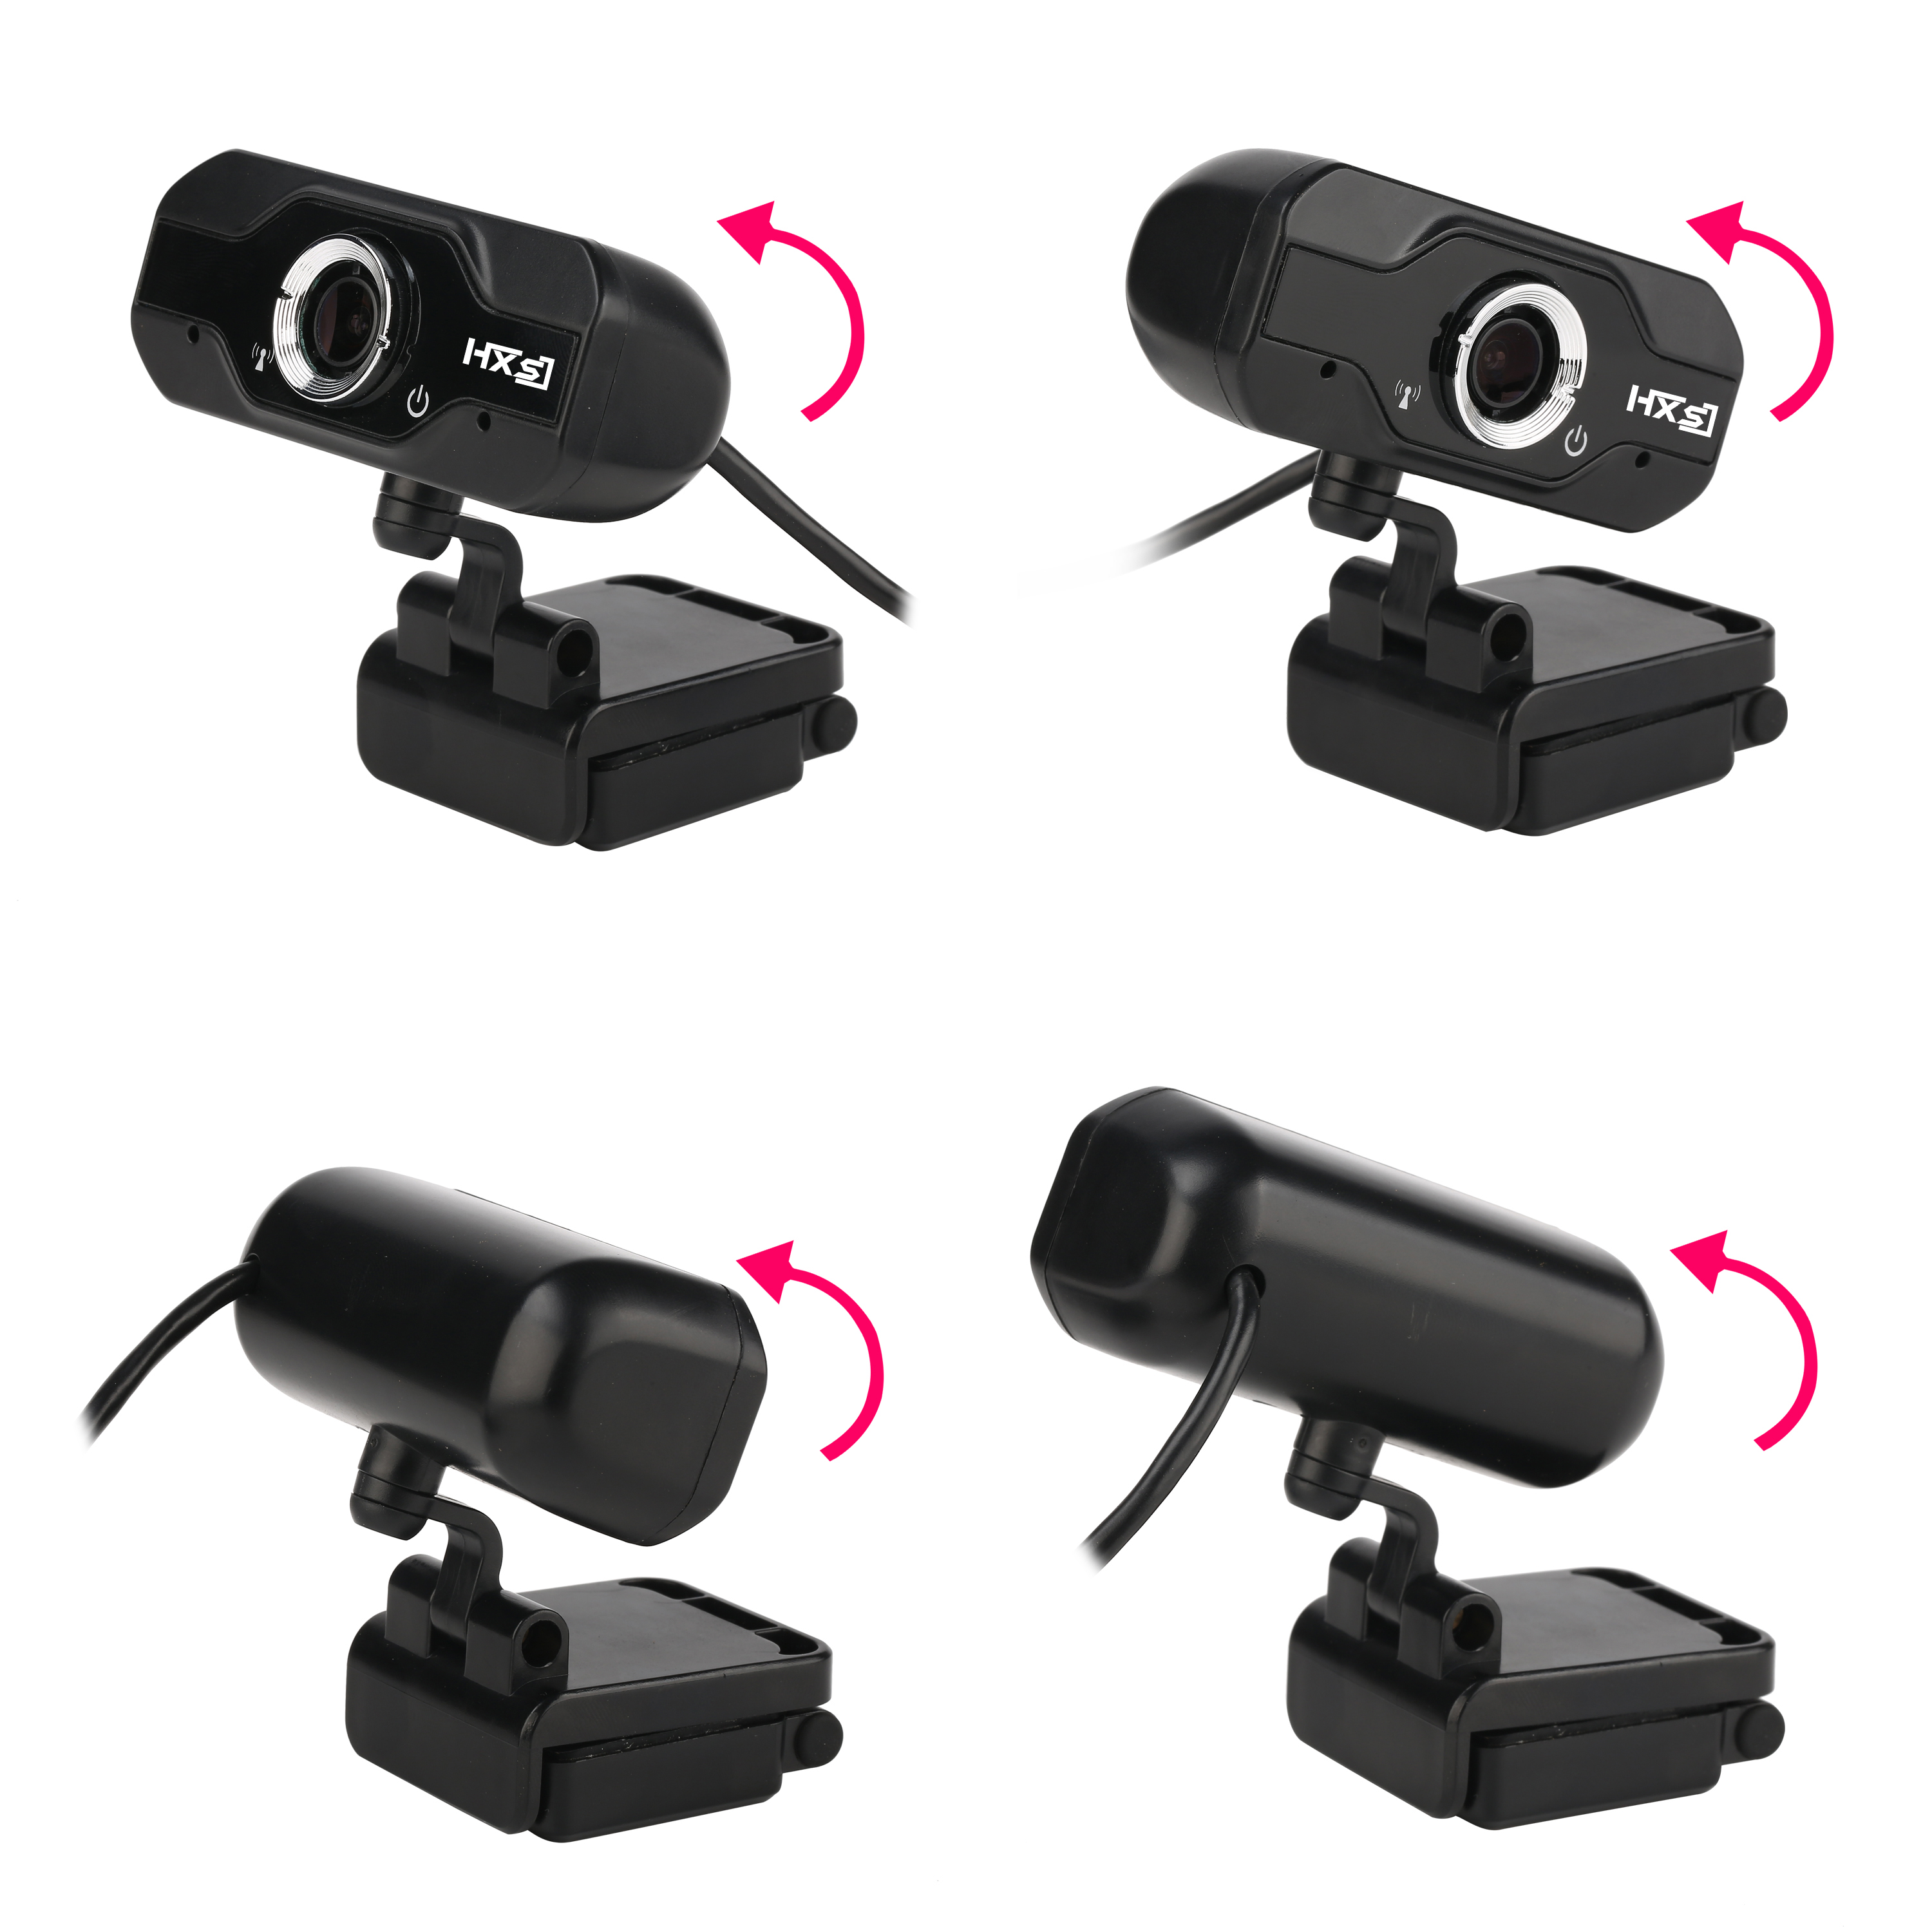 HXSJ HD 720P CMOS Sensor Webcam Built-in Microphone Adjustable Angle for Laptop Desktop 52